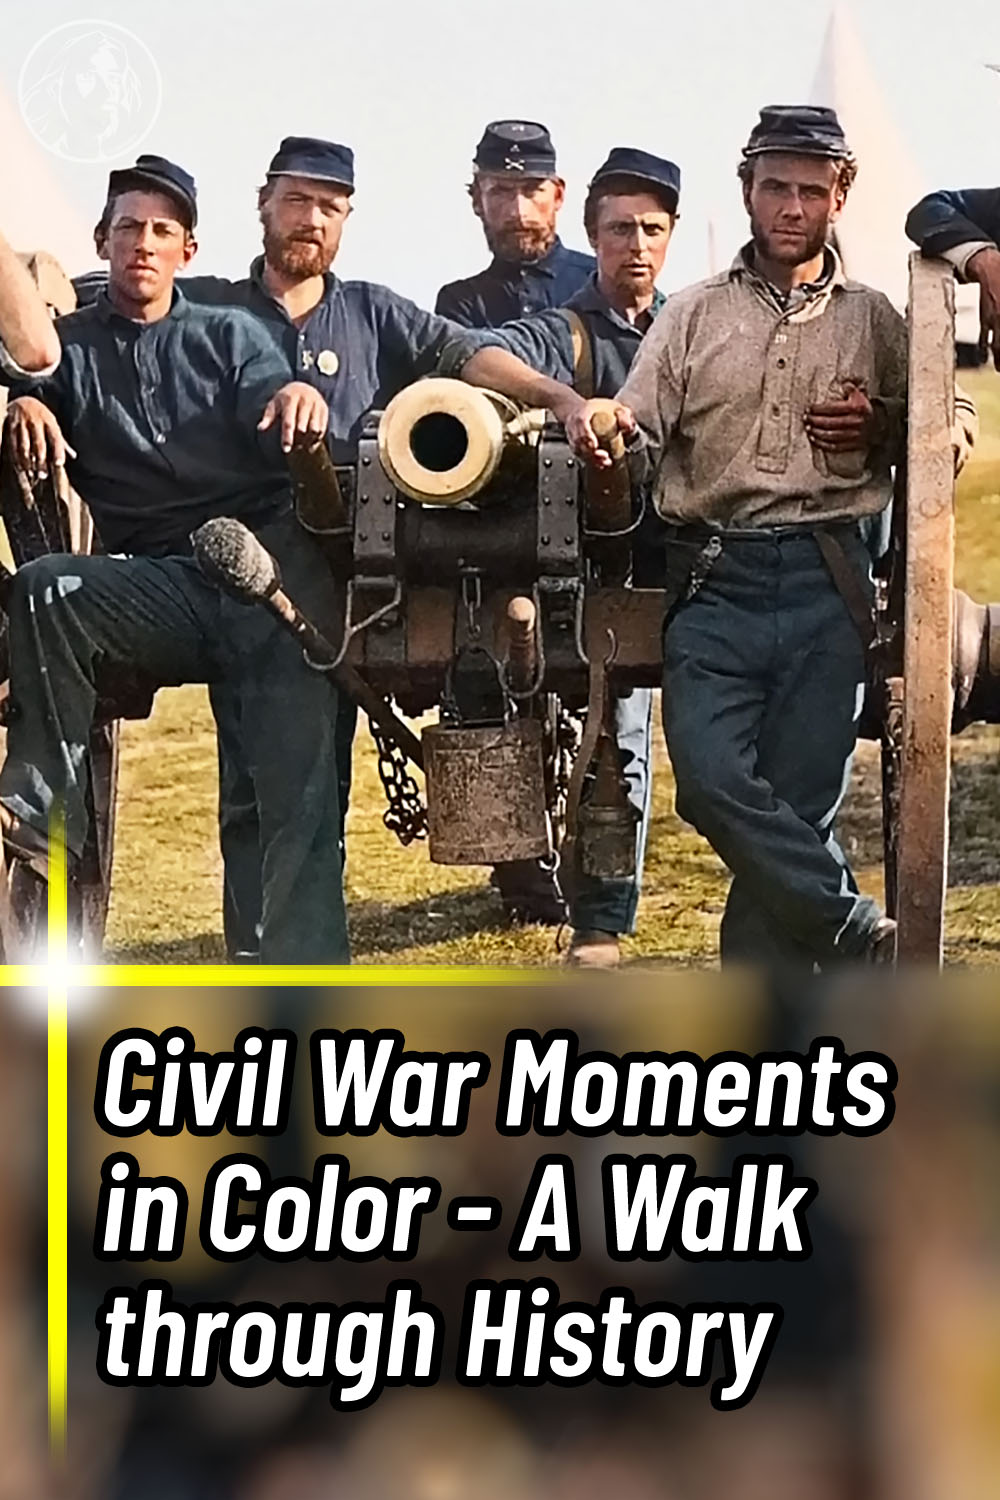 Civil War Moments in Color - A Walk through History